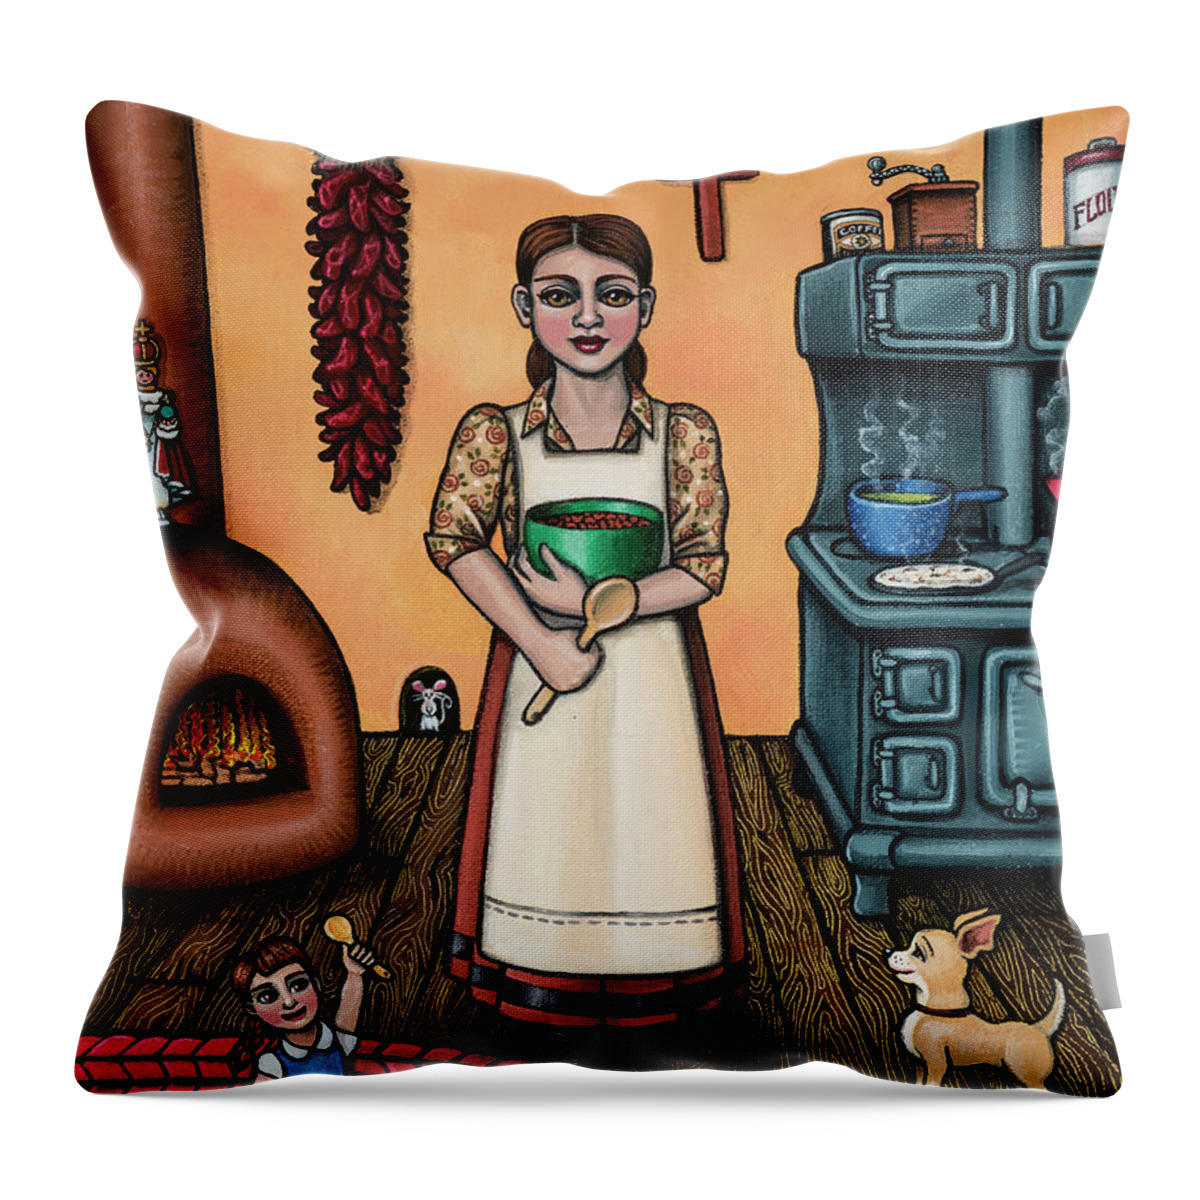 Kitchen Art Throw Pillow featuring the painting Carmelitas Kitchen Art by Victoria De Almeida